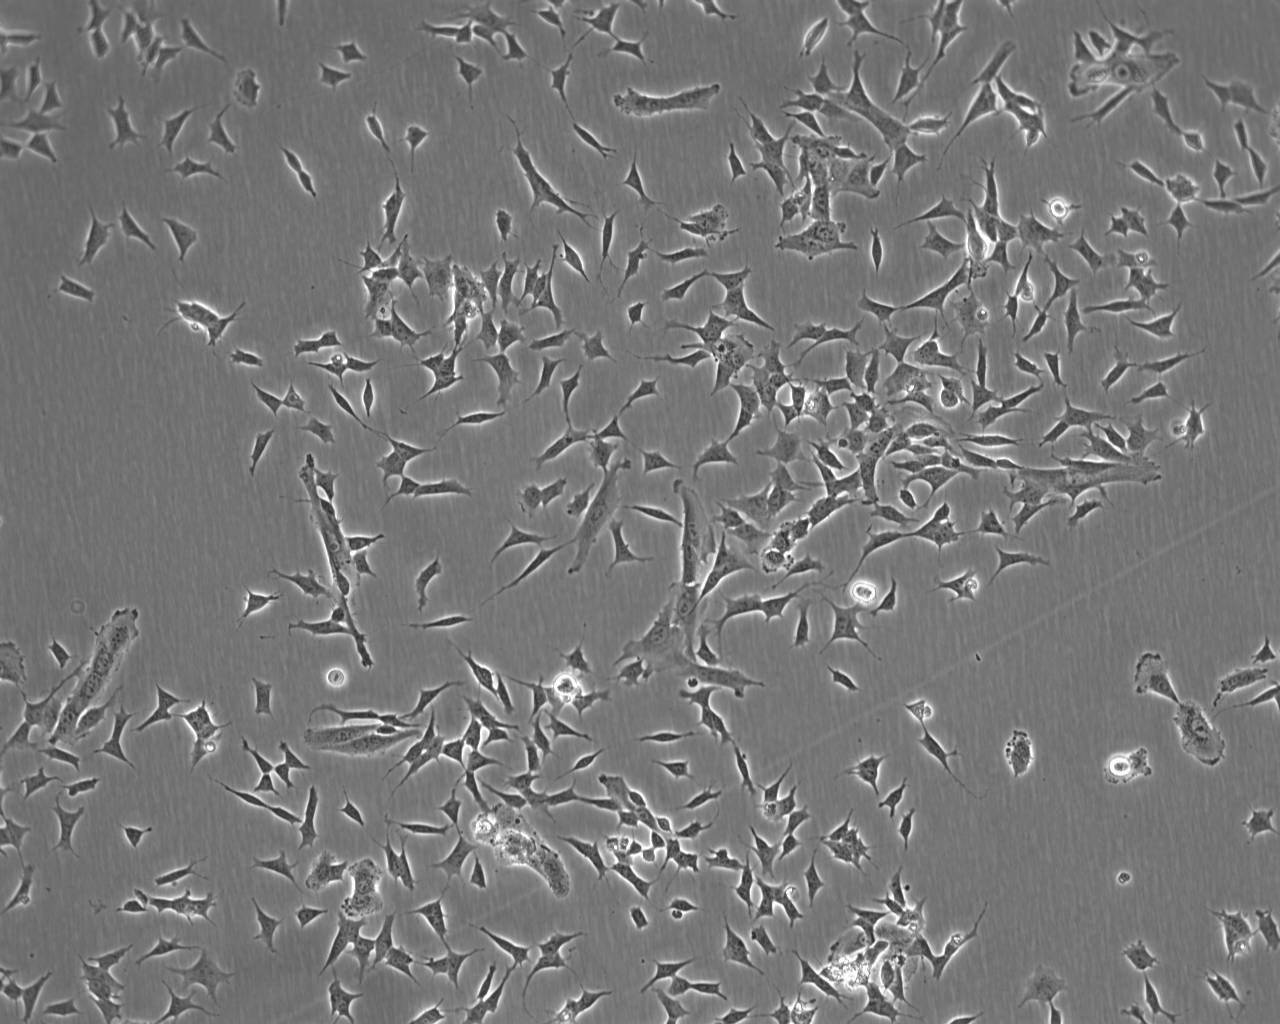 Daoy Cells|人脑髓母细胞瘤细胞系